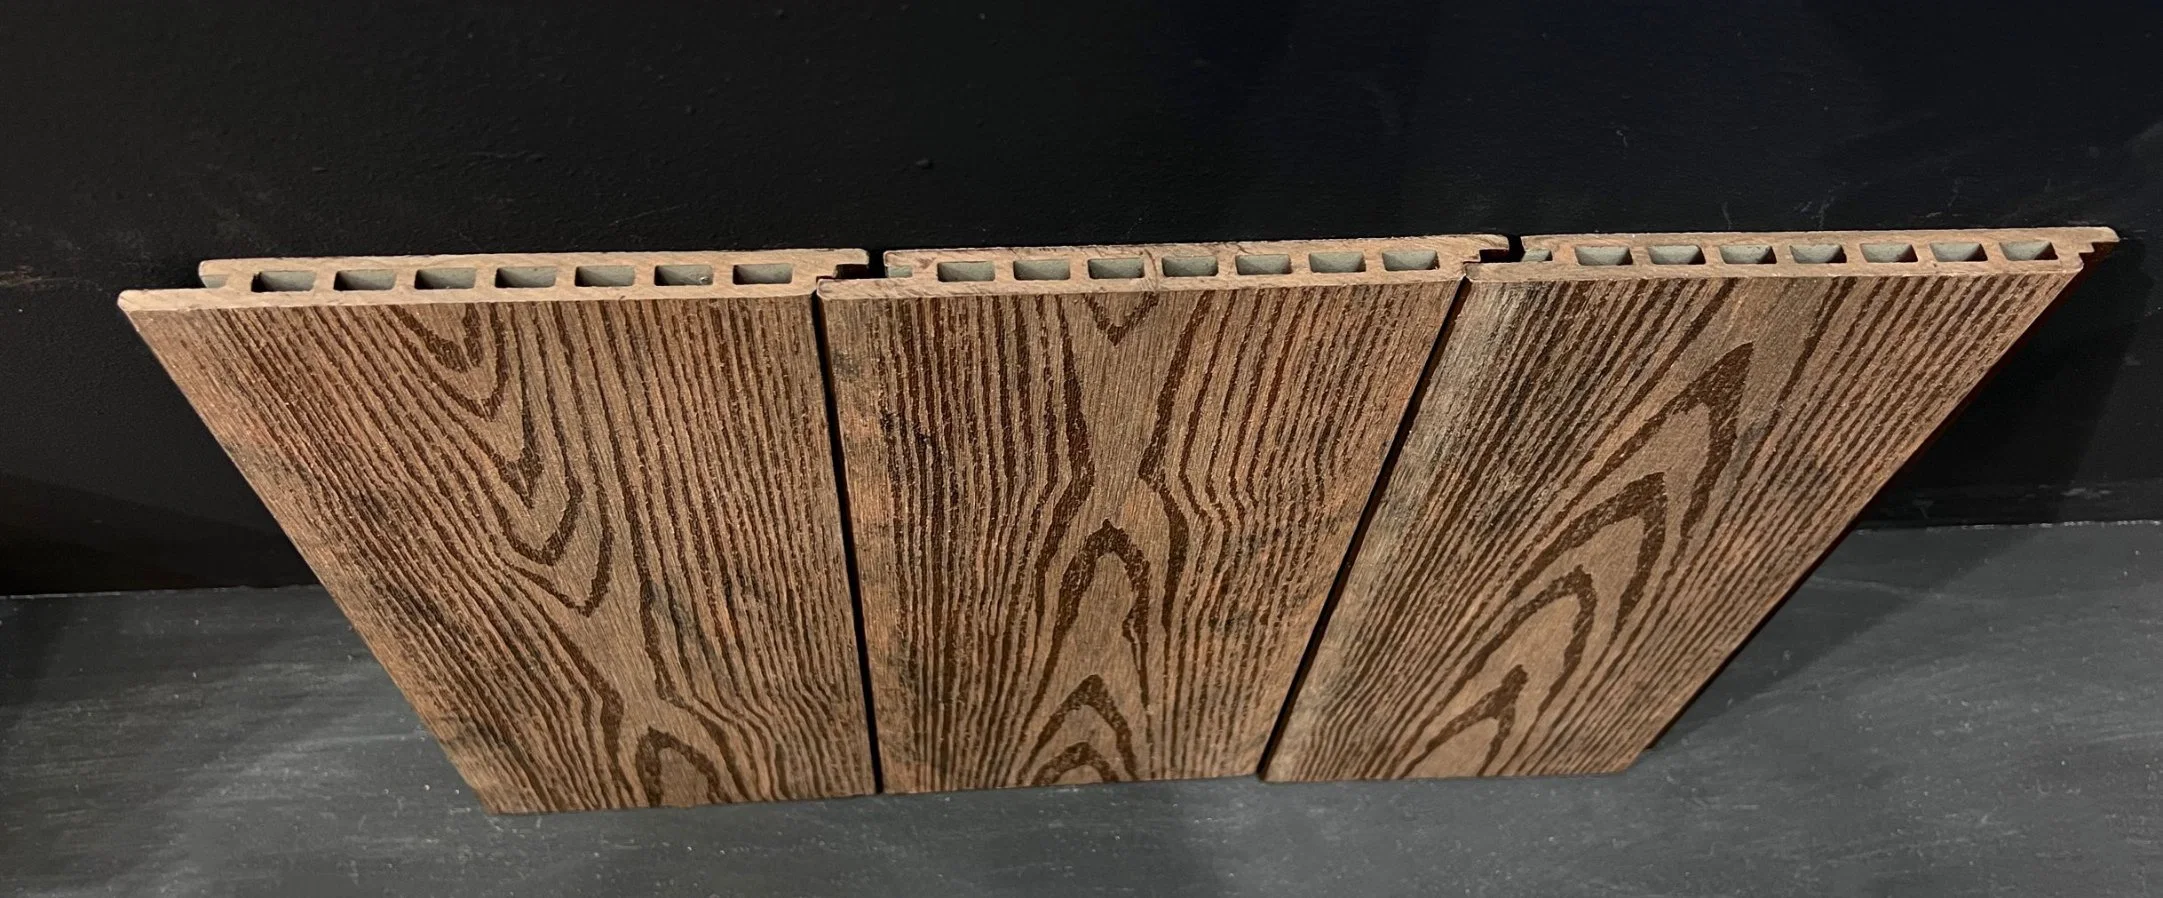 Hot Sale Outdoor WPC Wall Veneer Panel 3D Cladding Plastic Wood Board